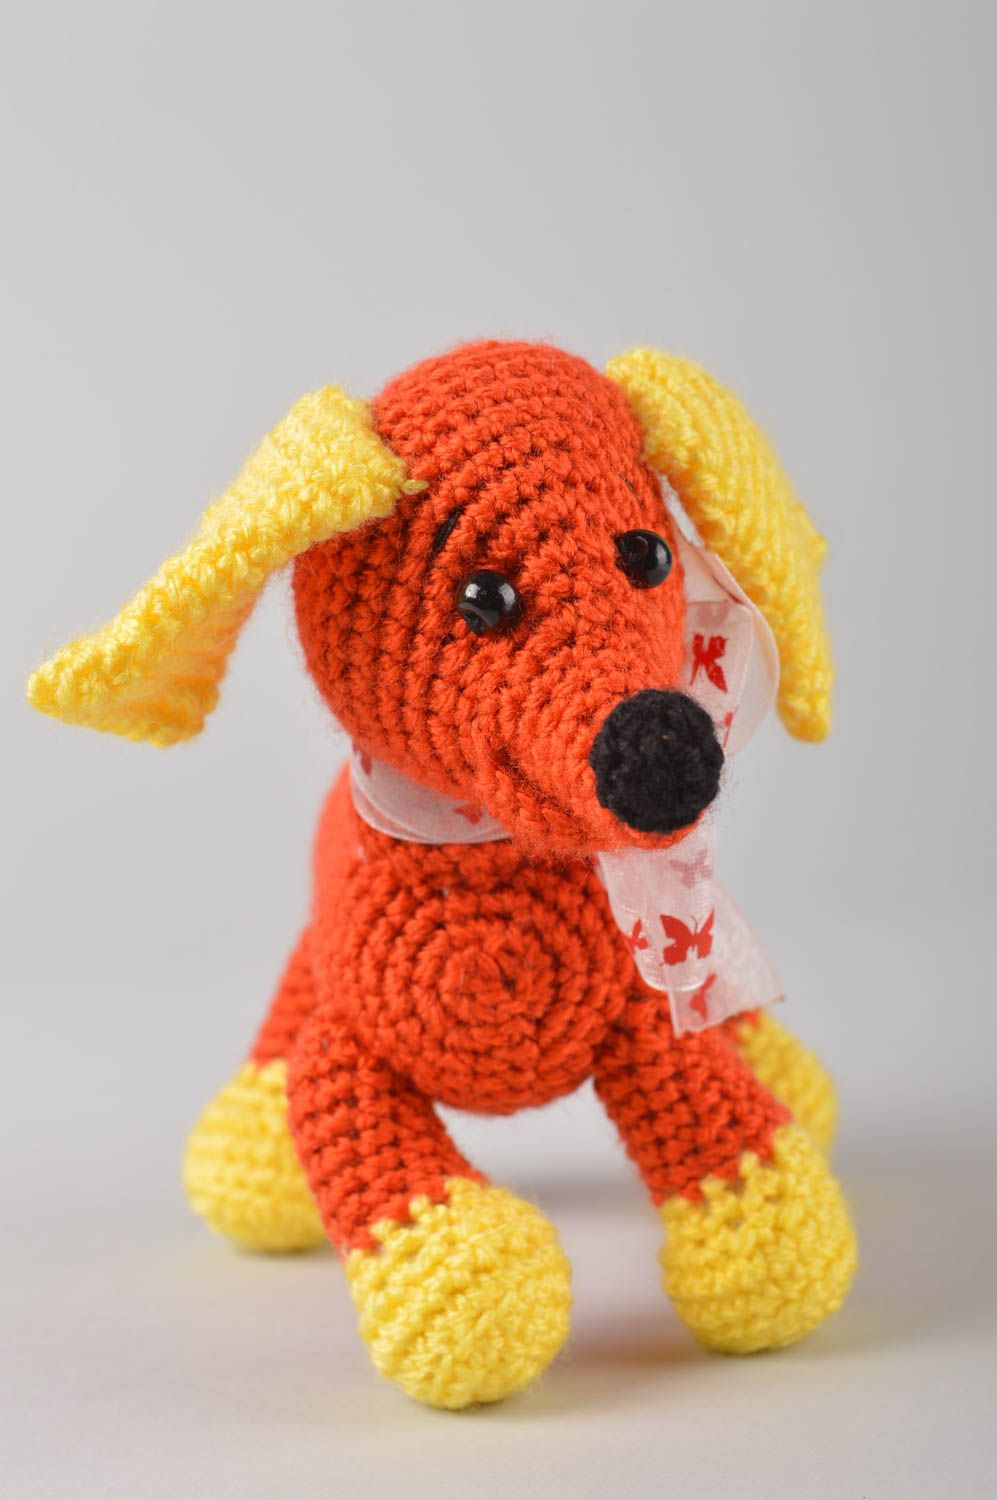 Handmade toy designer toy crochet toy baby toy nursery decor gift for children photo 3